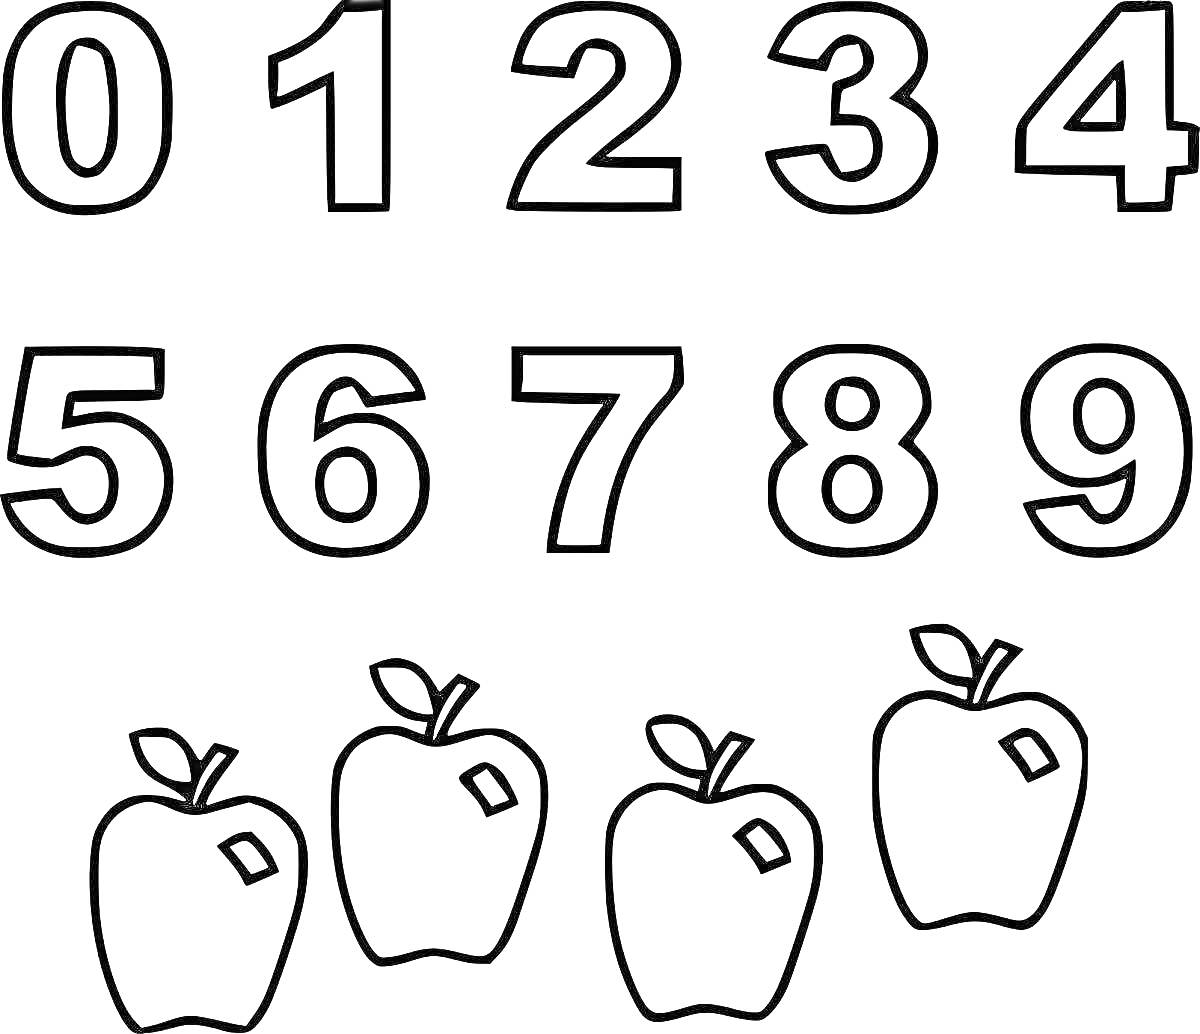 Раскраска Цифры от 0 до 9 и четыре яблока